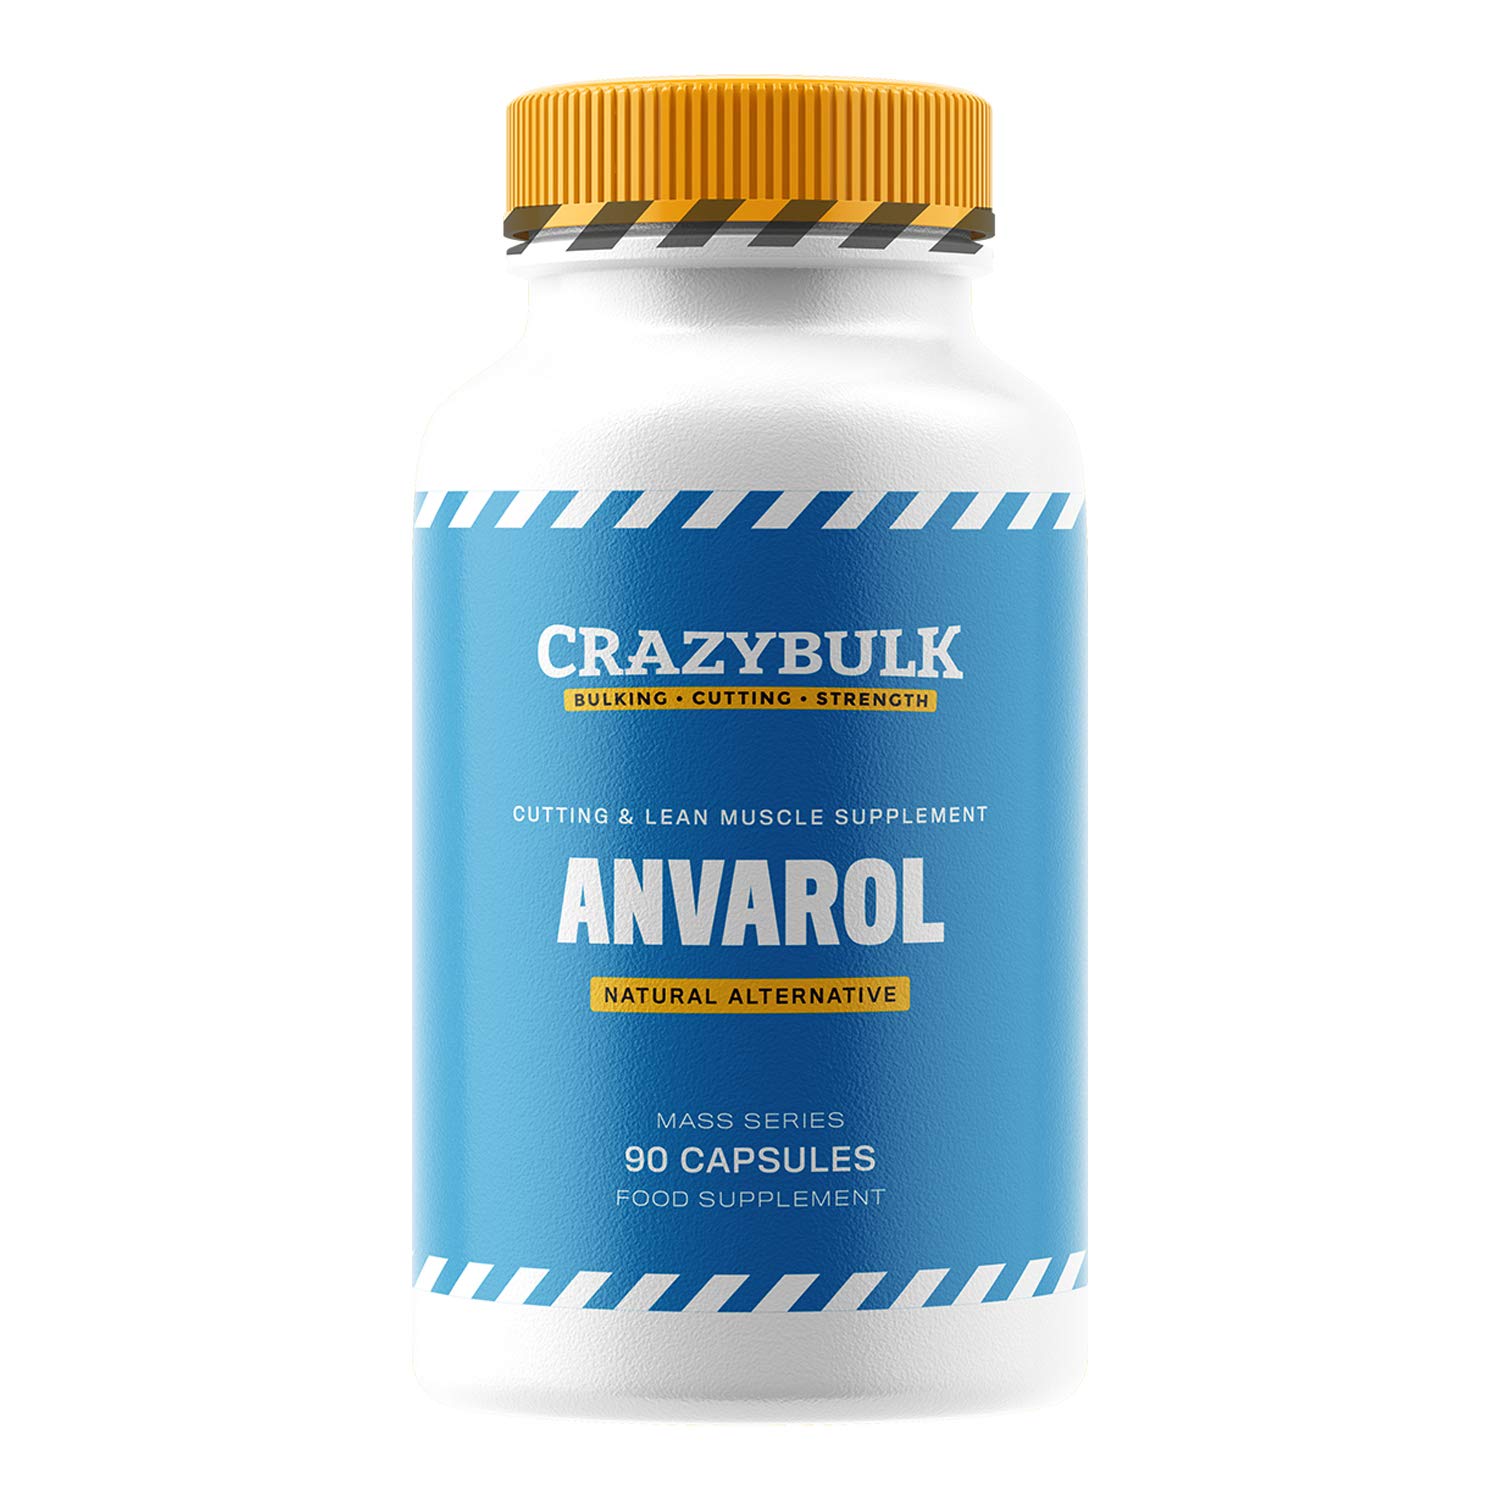 avarol - Does Anavar Build Muscle? REVEALED